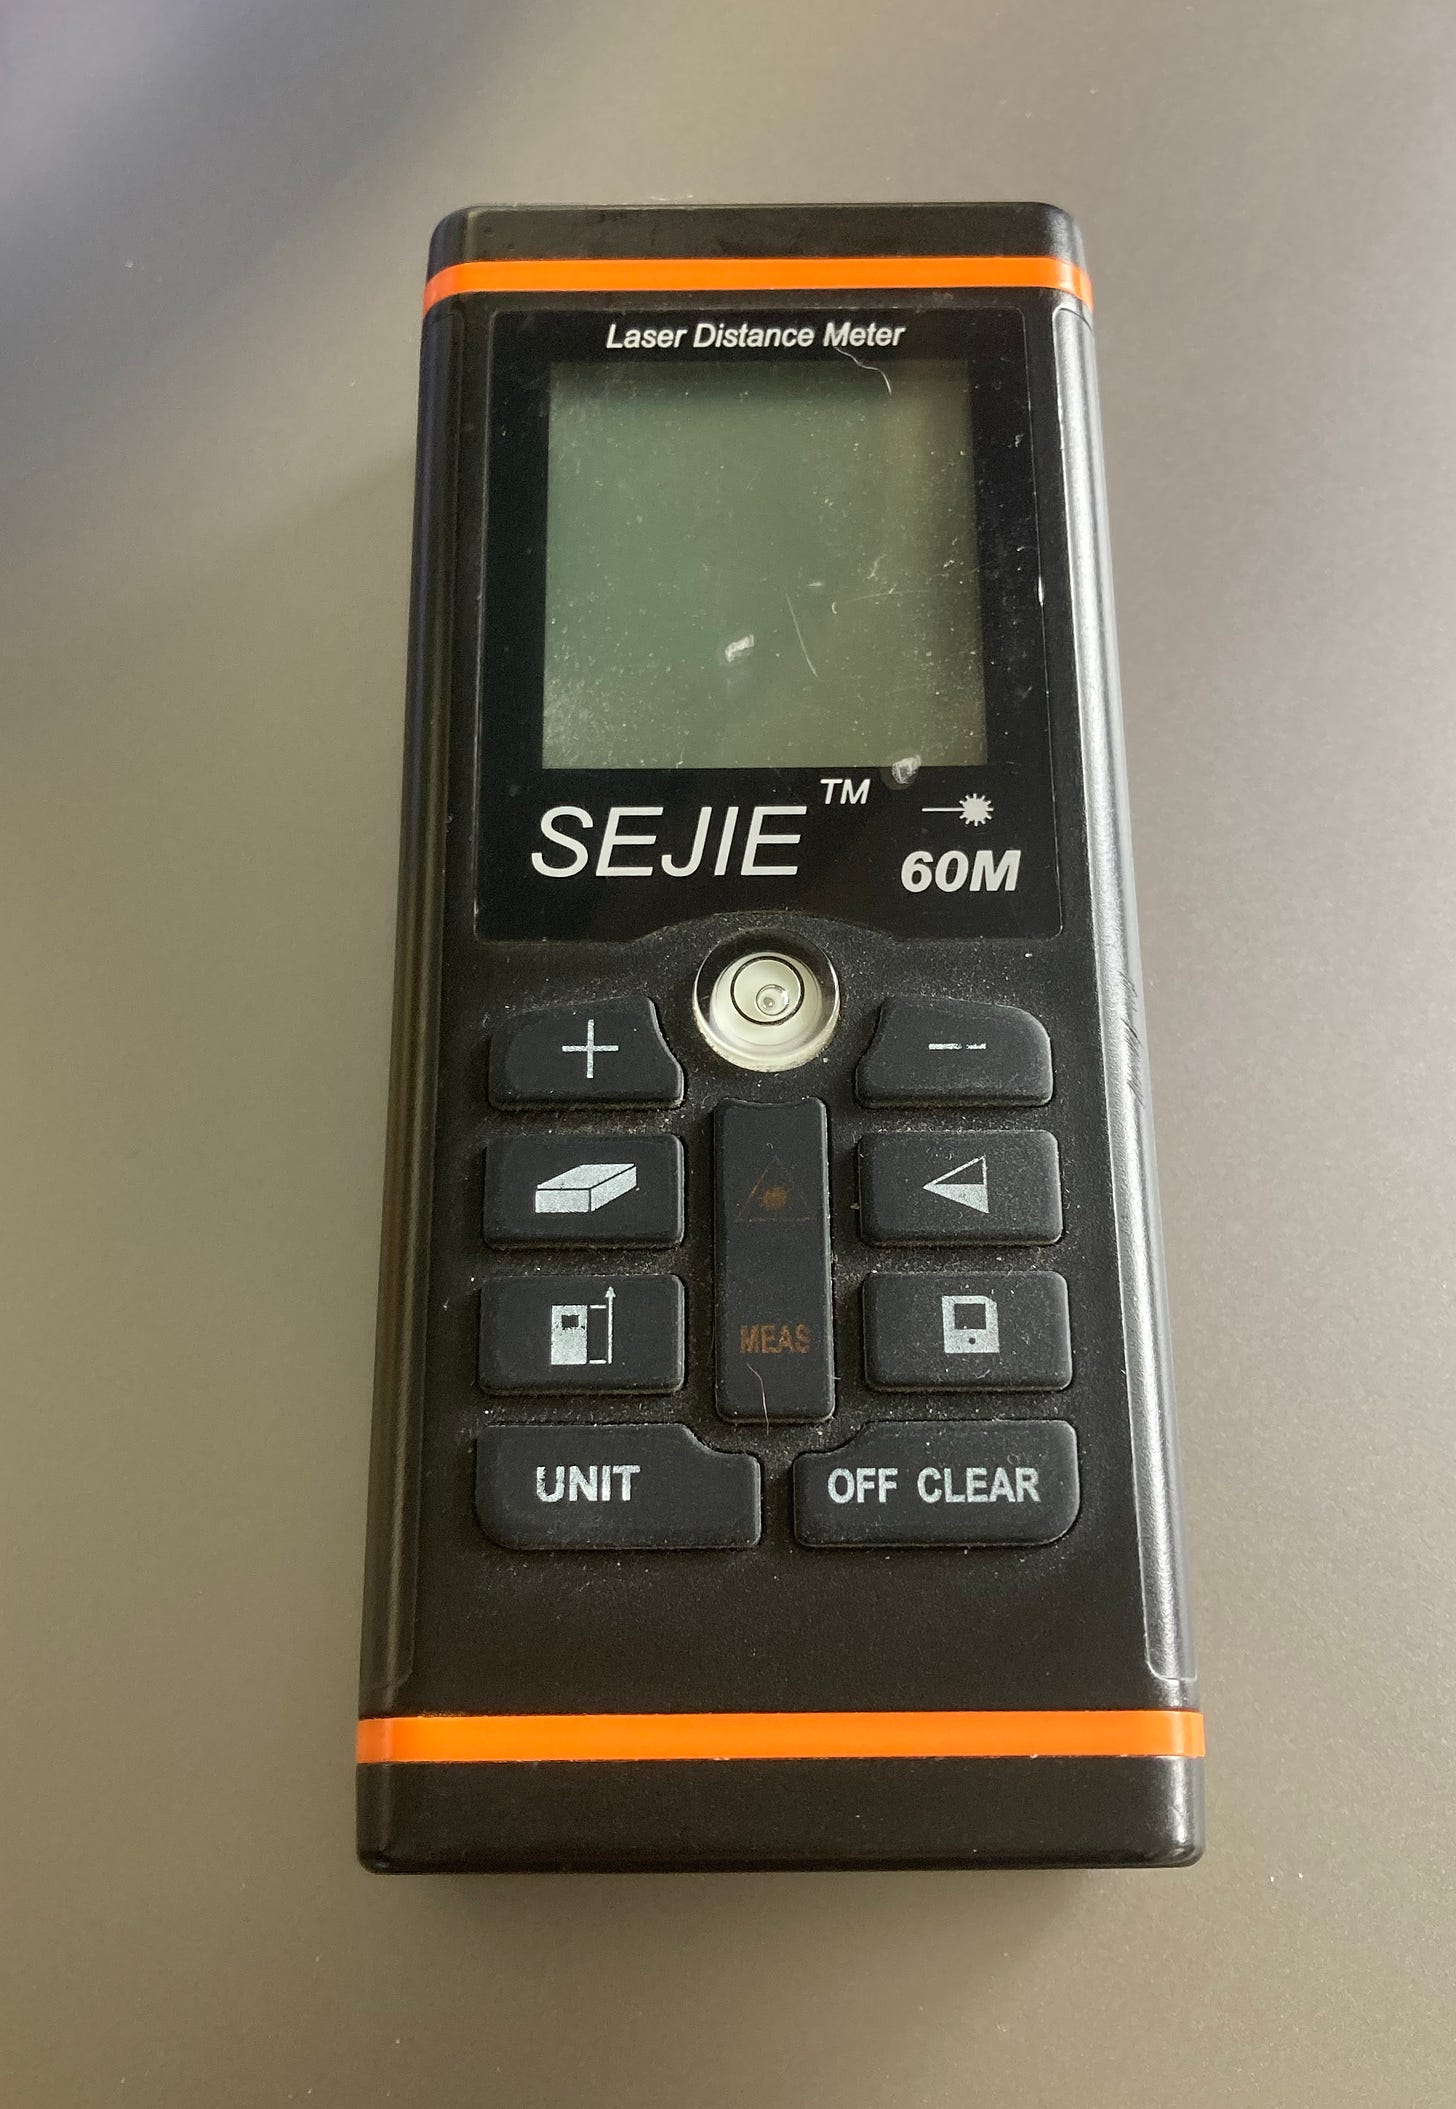 A photo of my Sejie laser ruler.